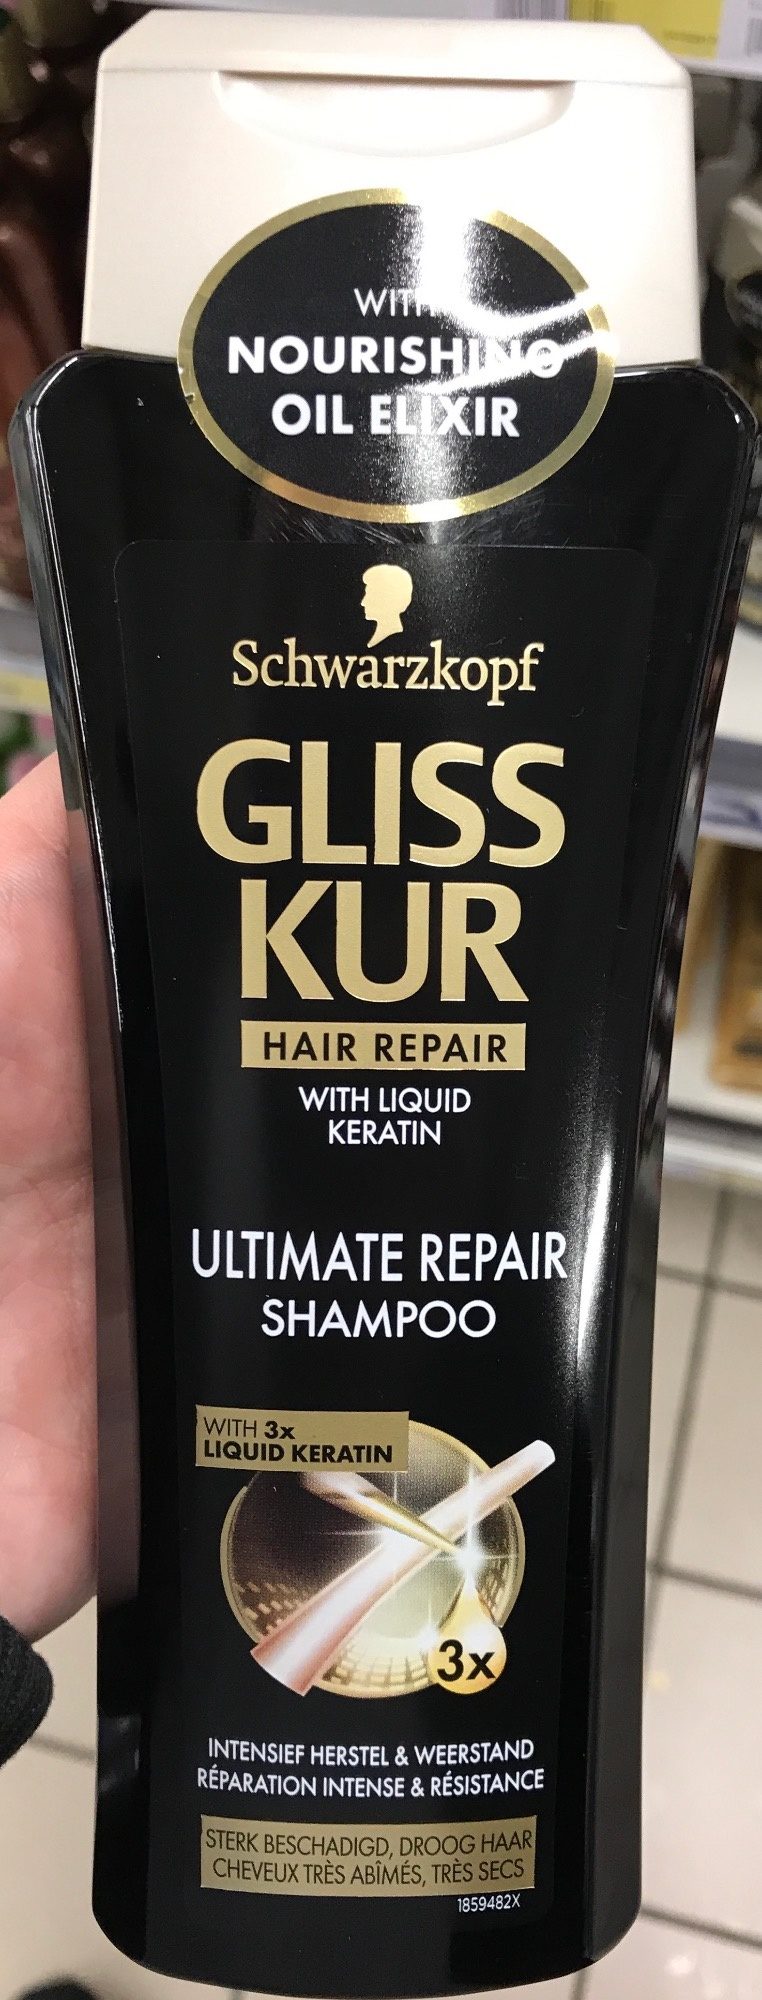 Gliss Kur Ultimate Repair Shampoo - Product - en